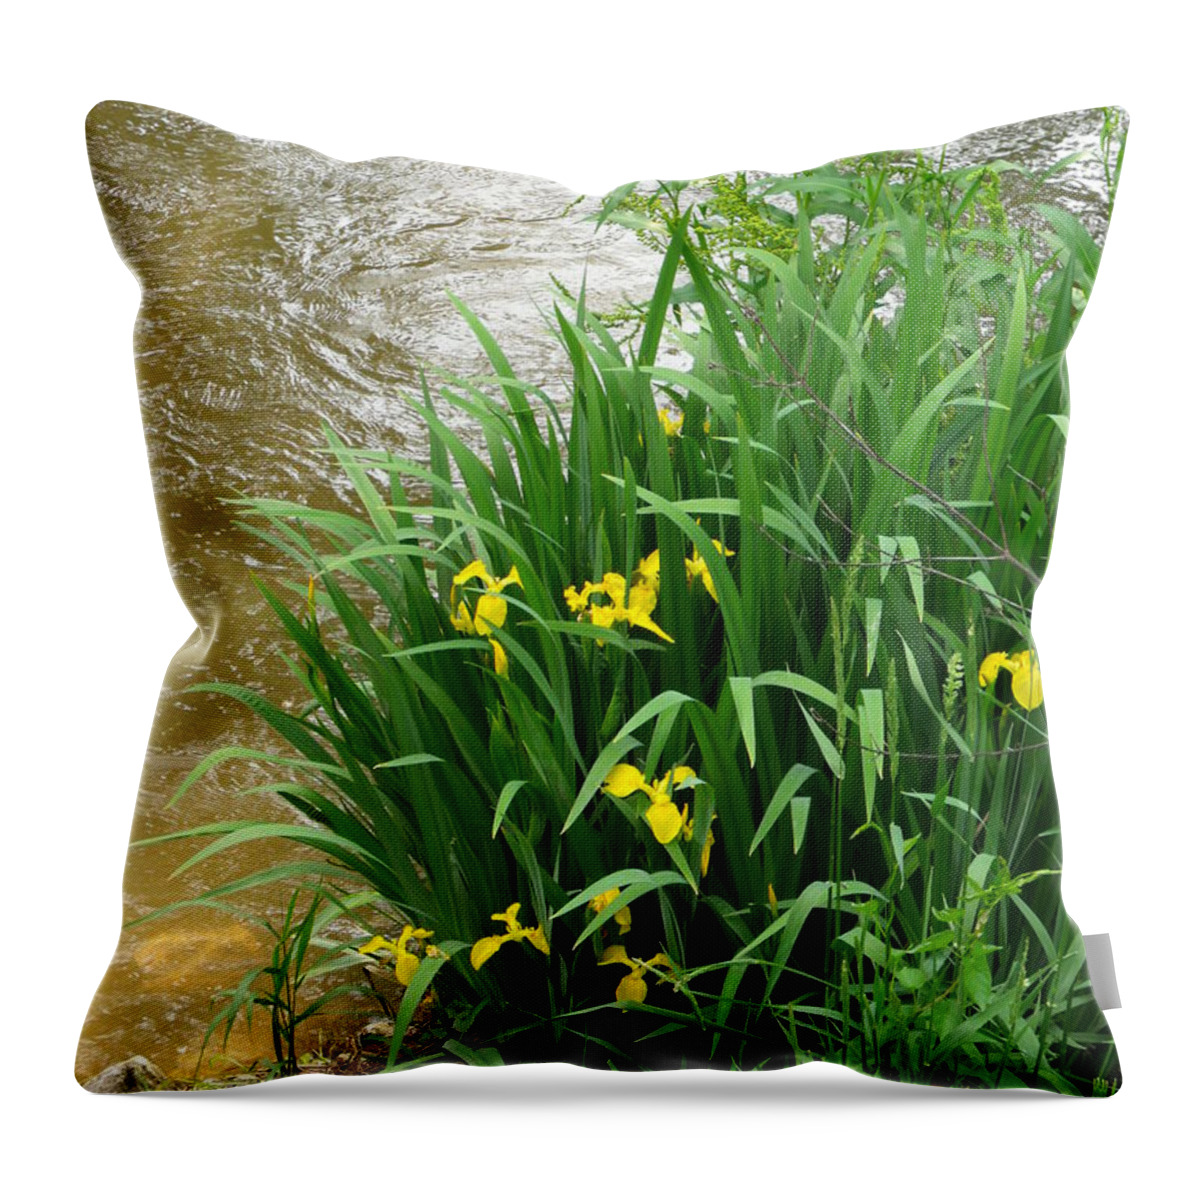 Flowers Throw Pillow featuring the photograph Yellow Iris by Anna Villarreal Garbis